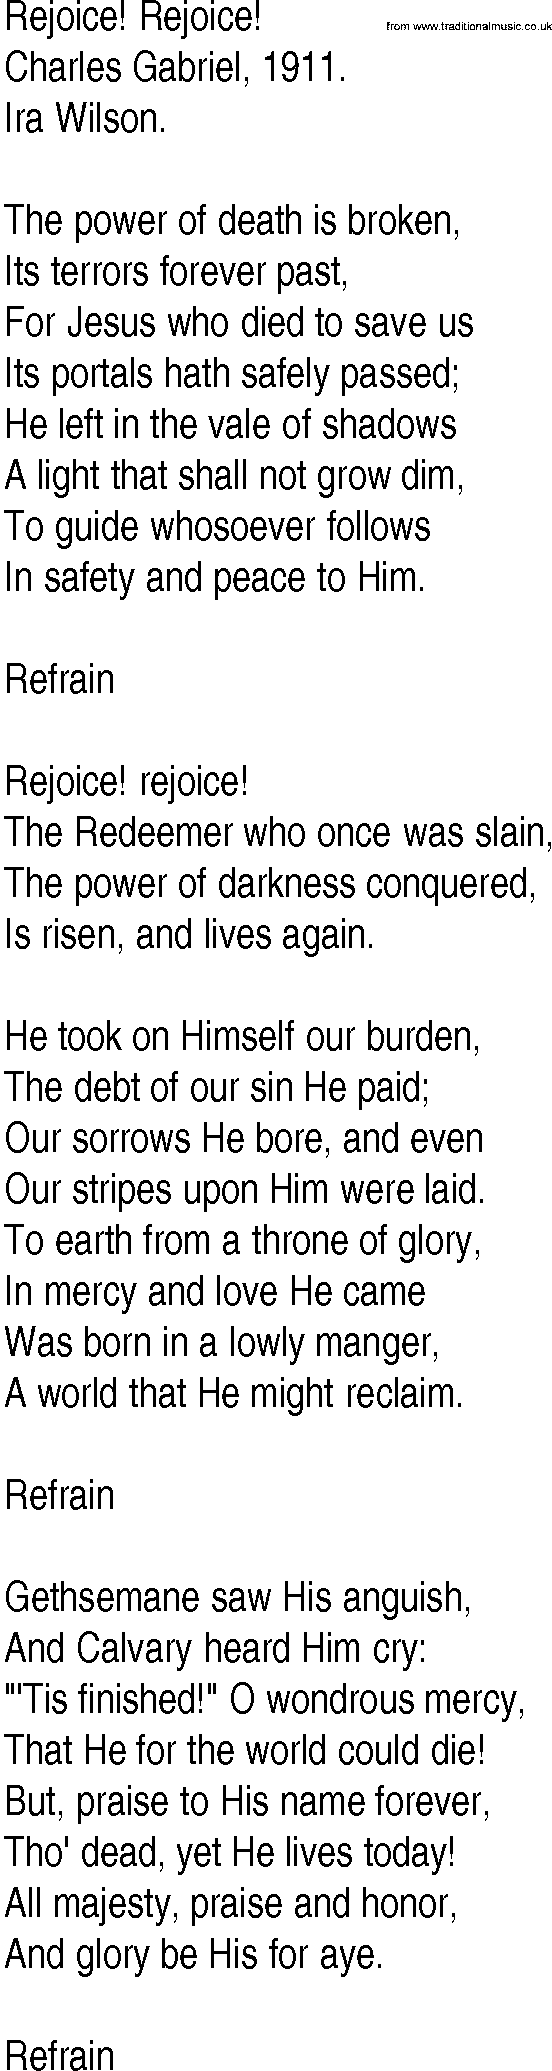 Hymn and Gospel Song: Rejoice! Rejoice! by Charles Gabriel lyrics